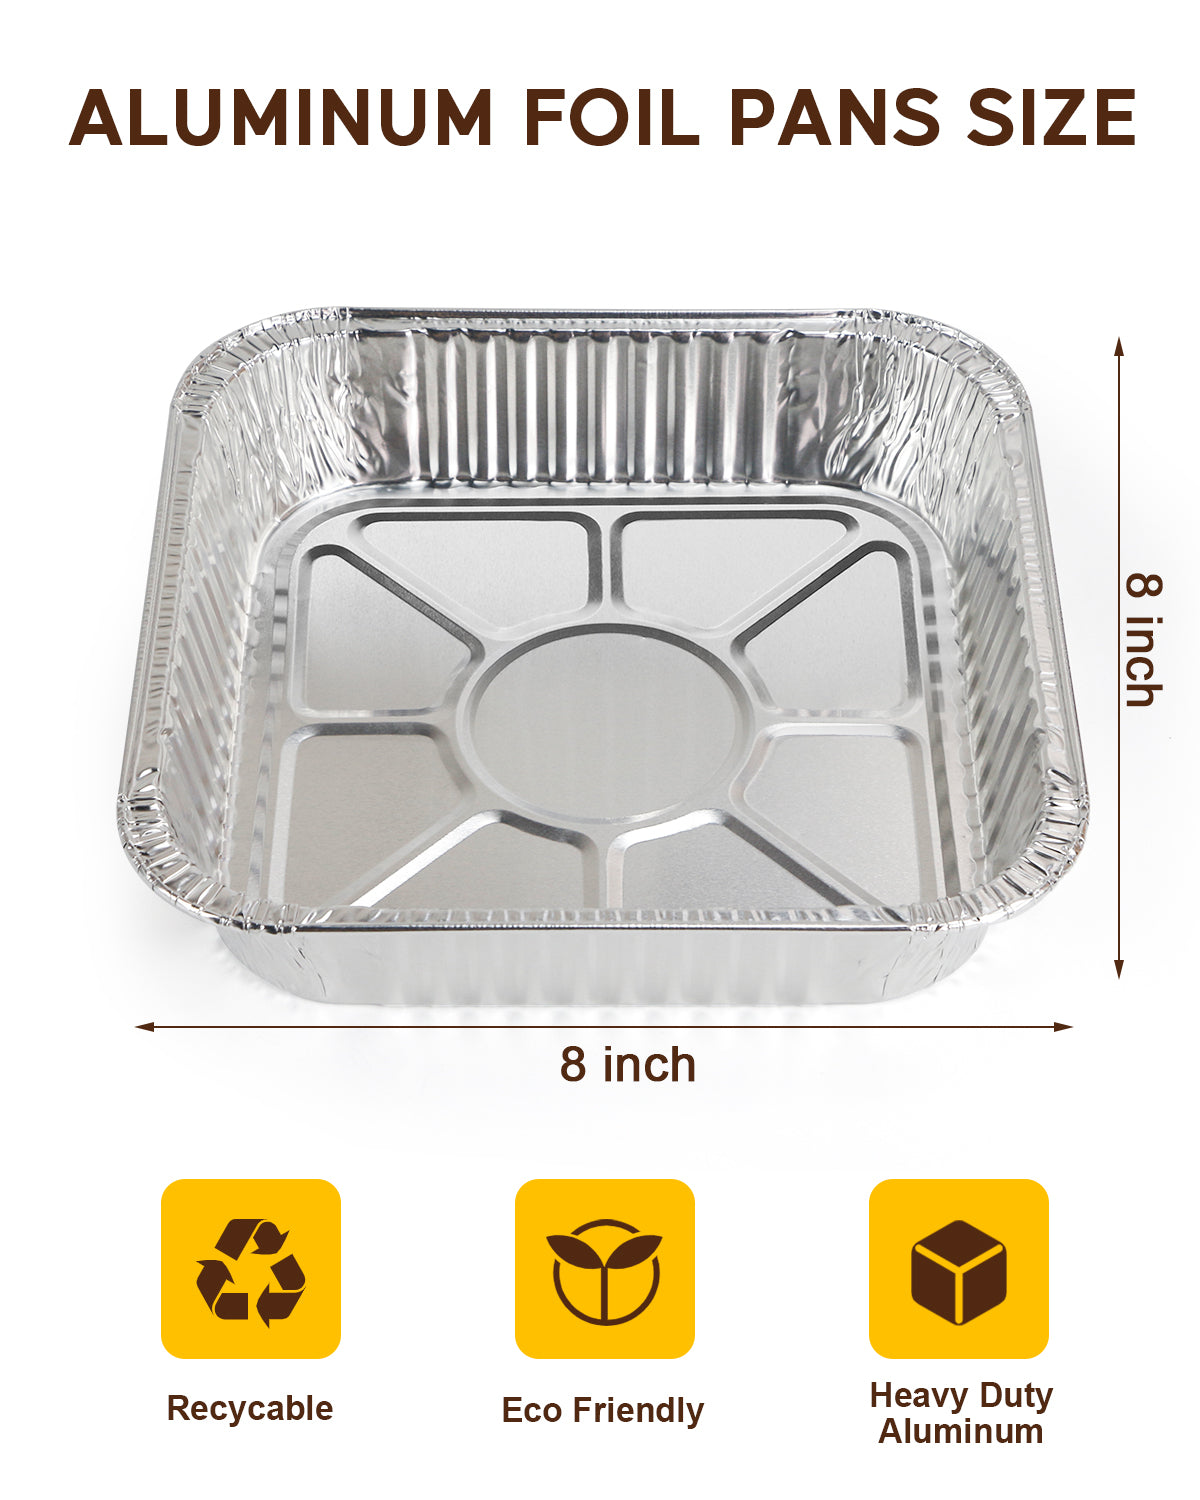 30PCS 20CM Square Air Fryer Aluminum Foil Pan Oven BBQ Tray Food